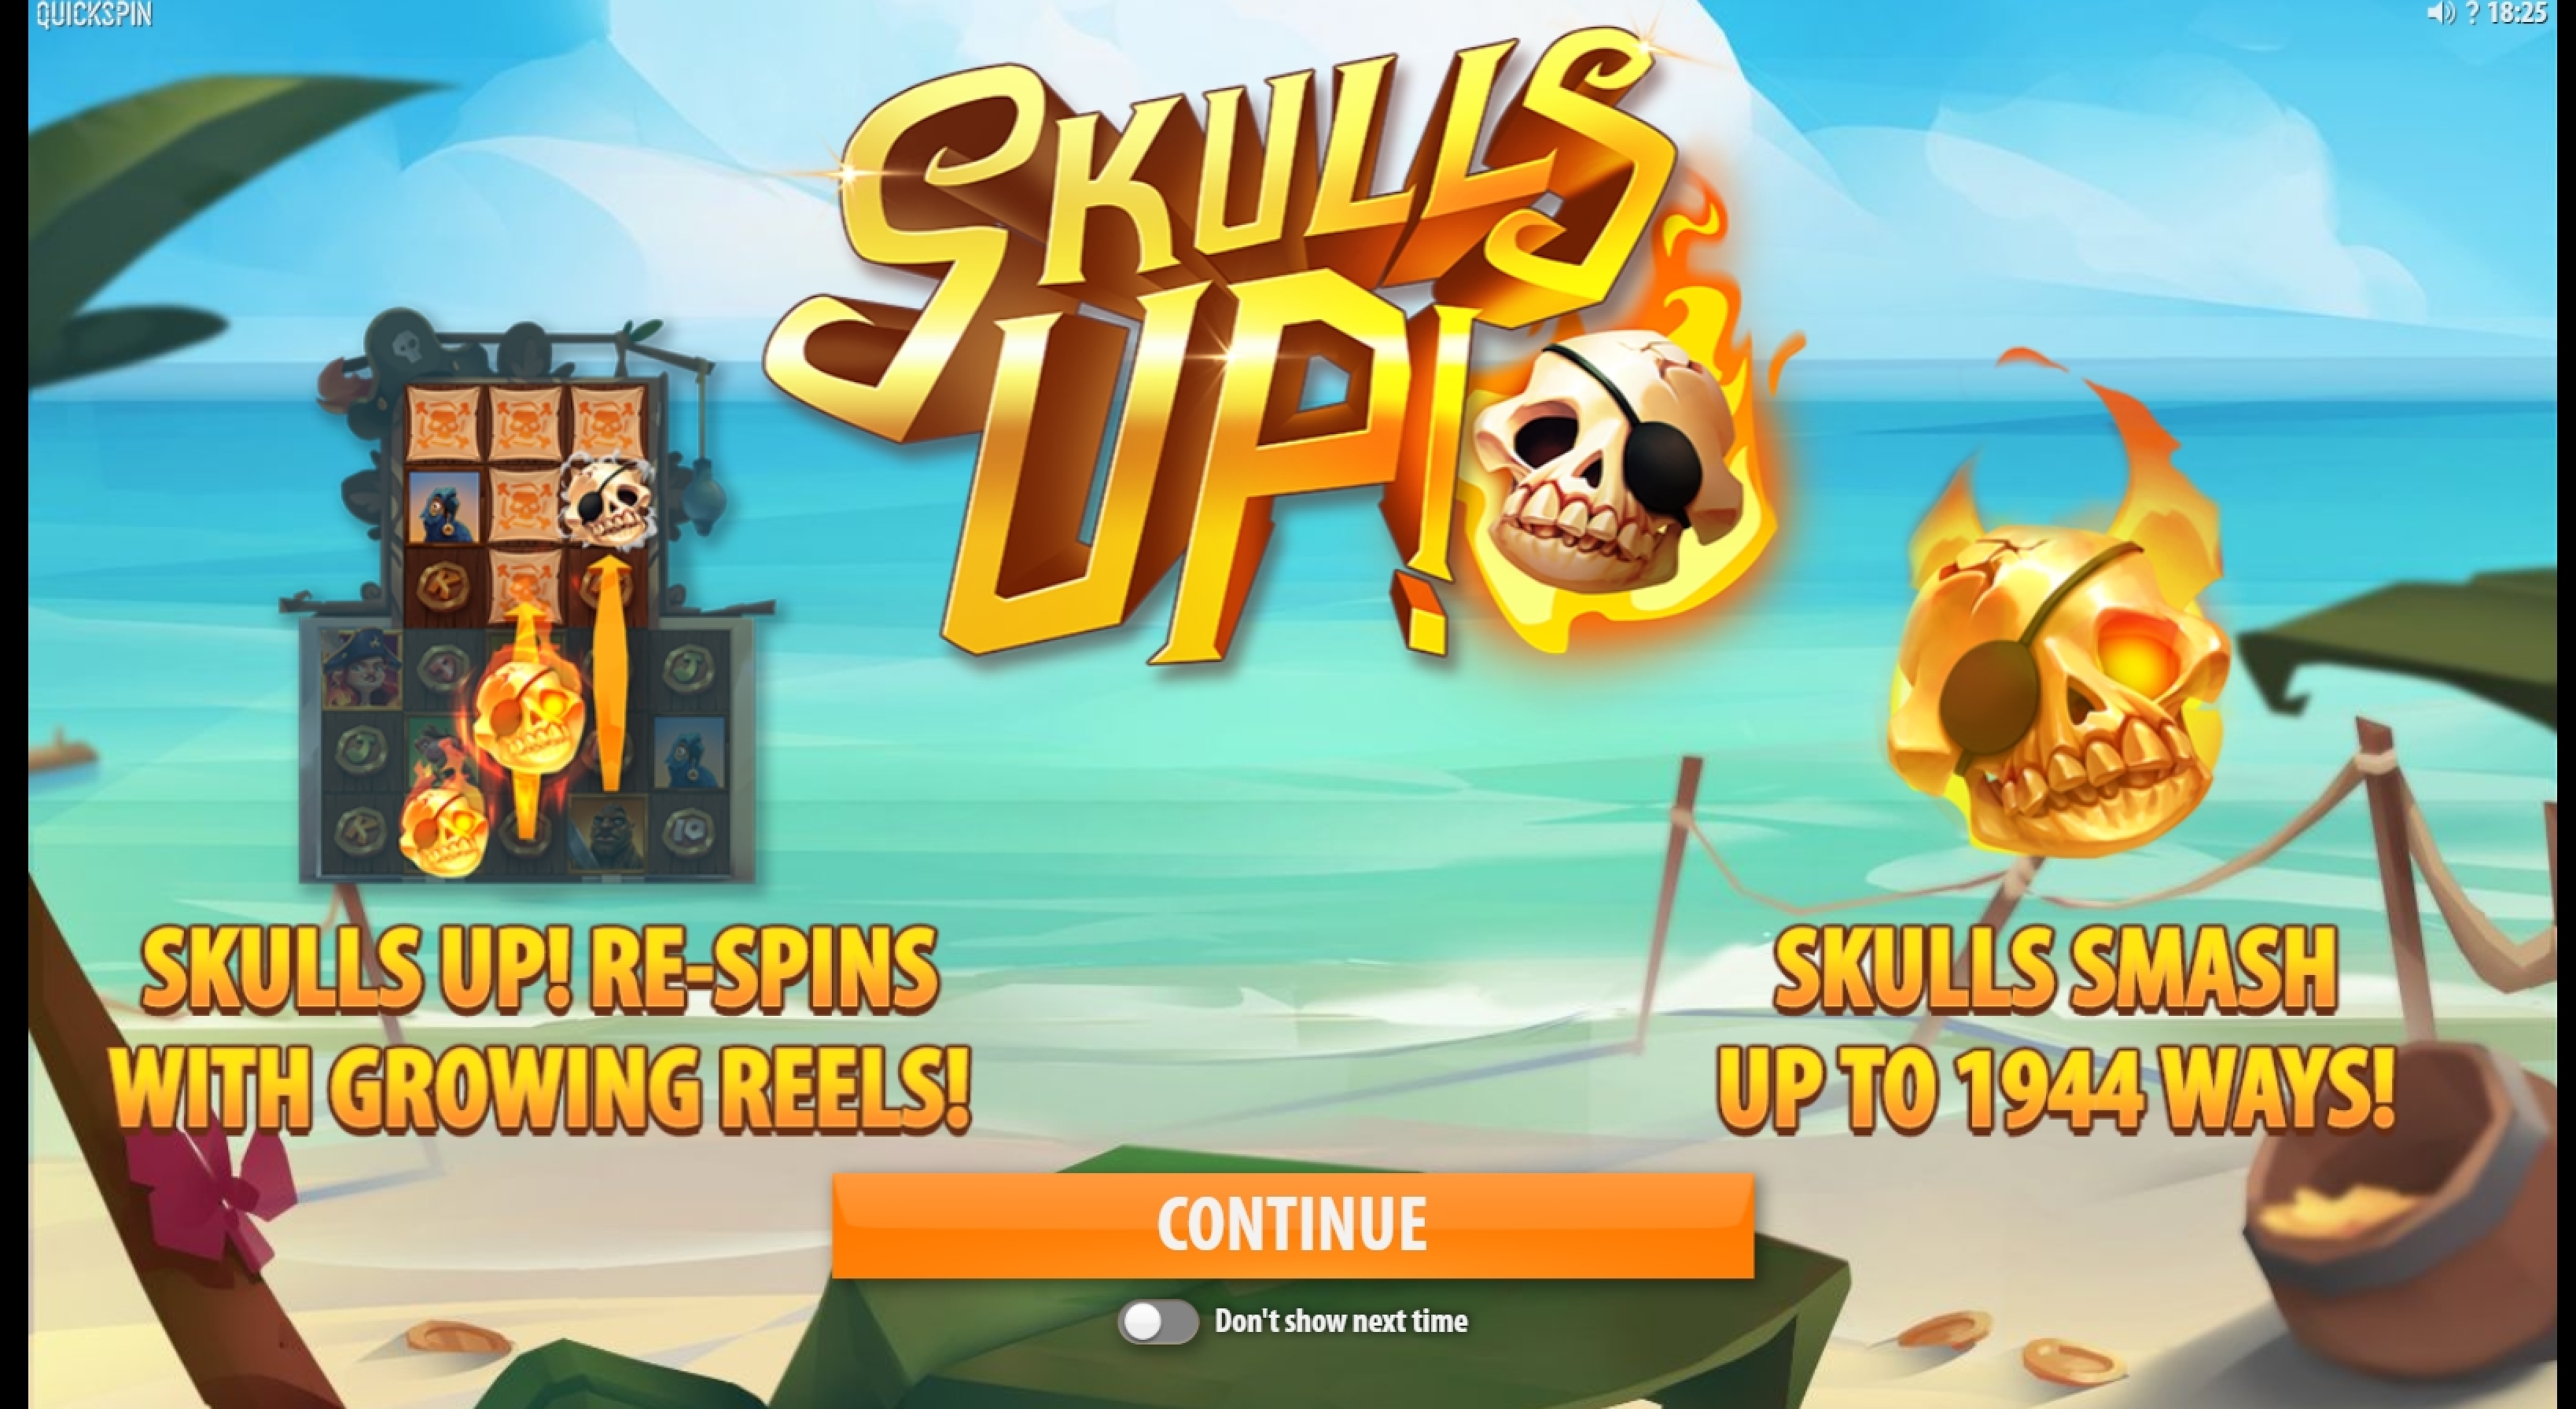 Play Skulls UP! Free Casino Slot Game by Quickspin